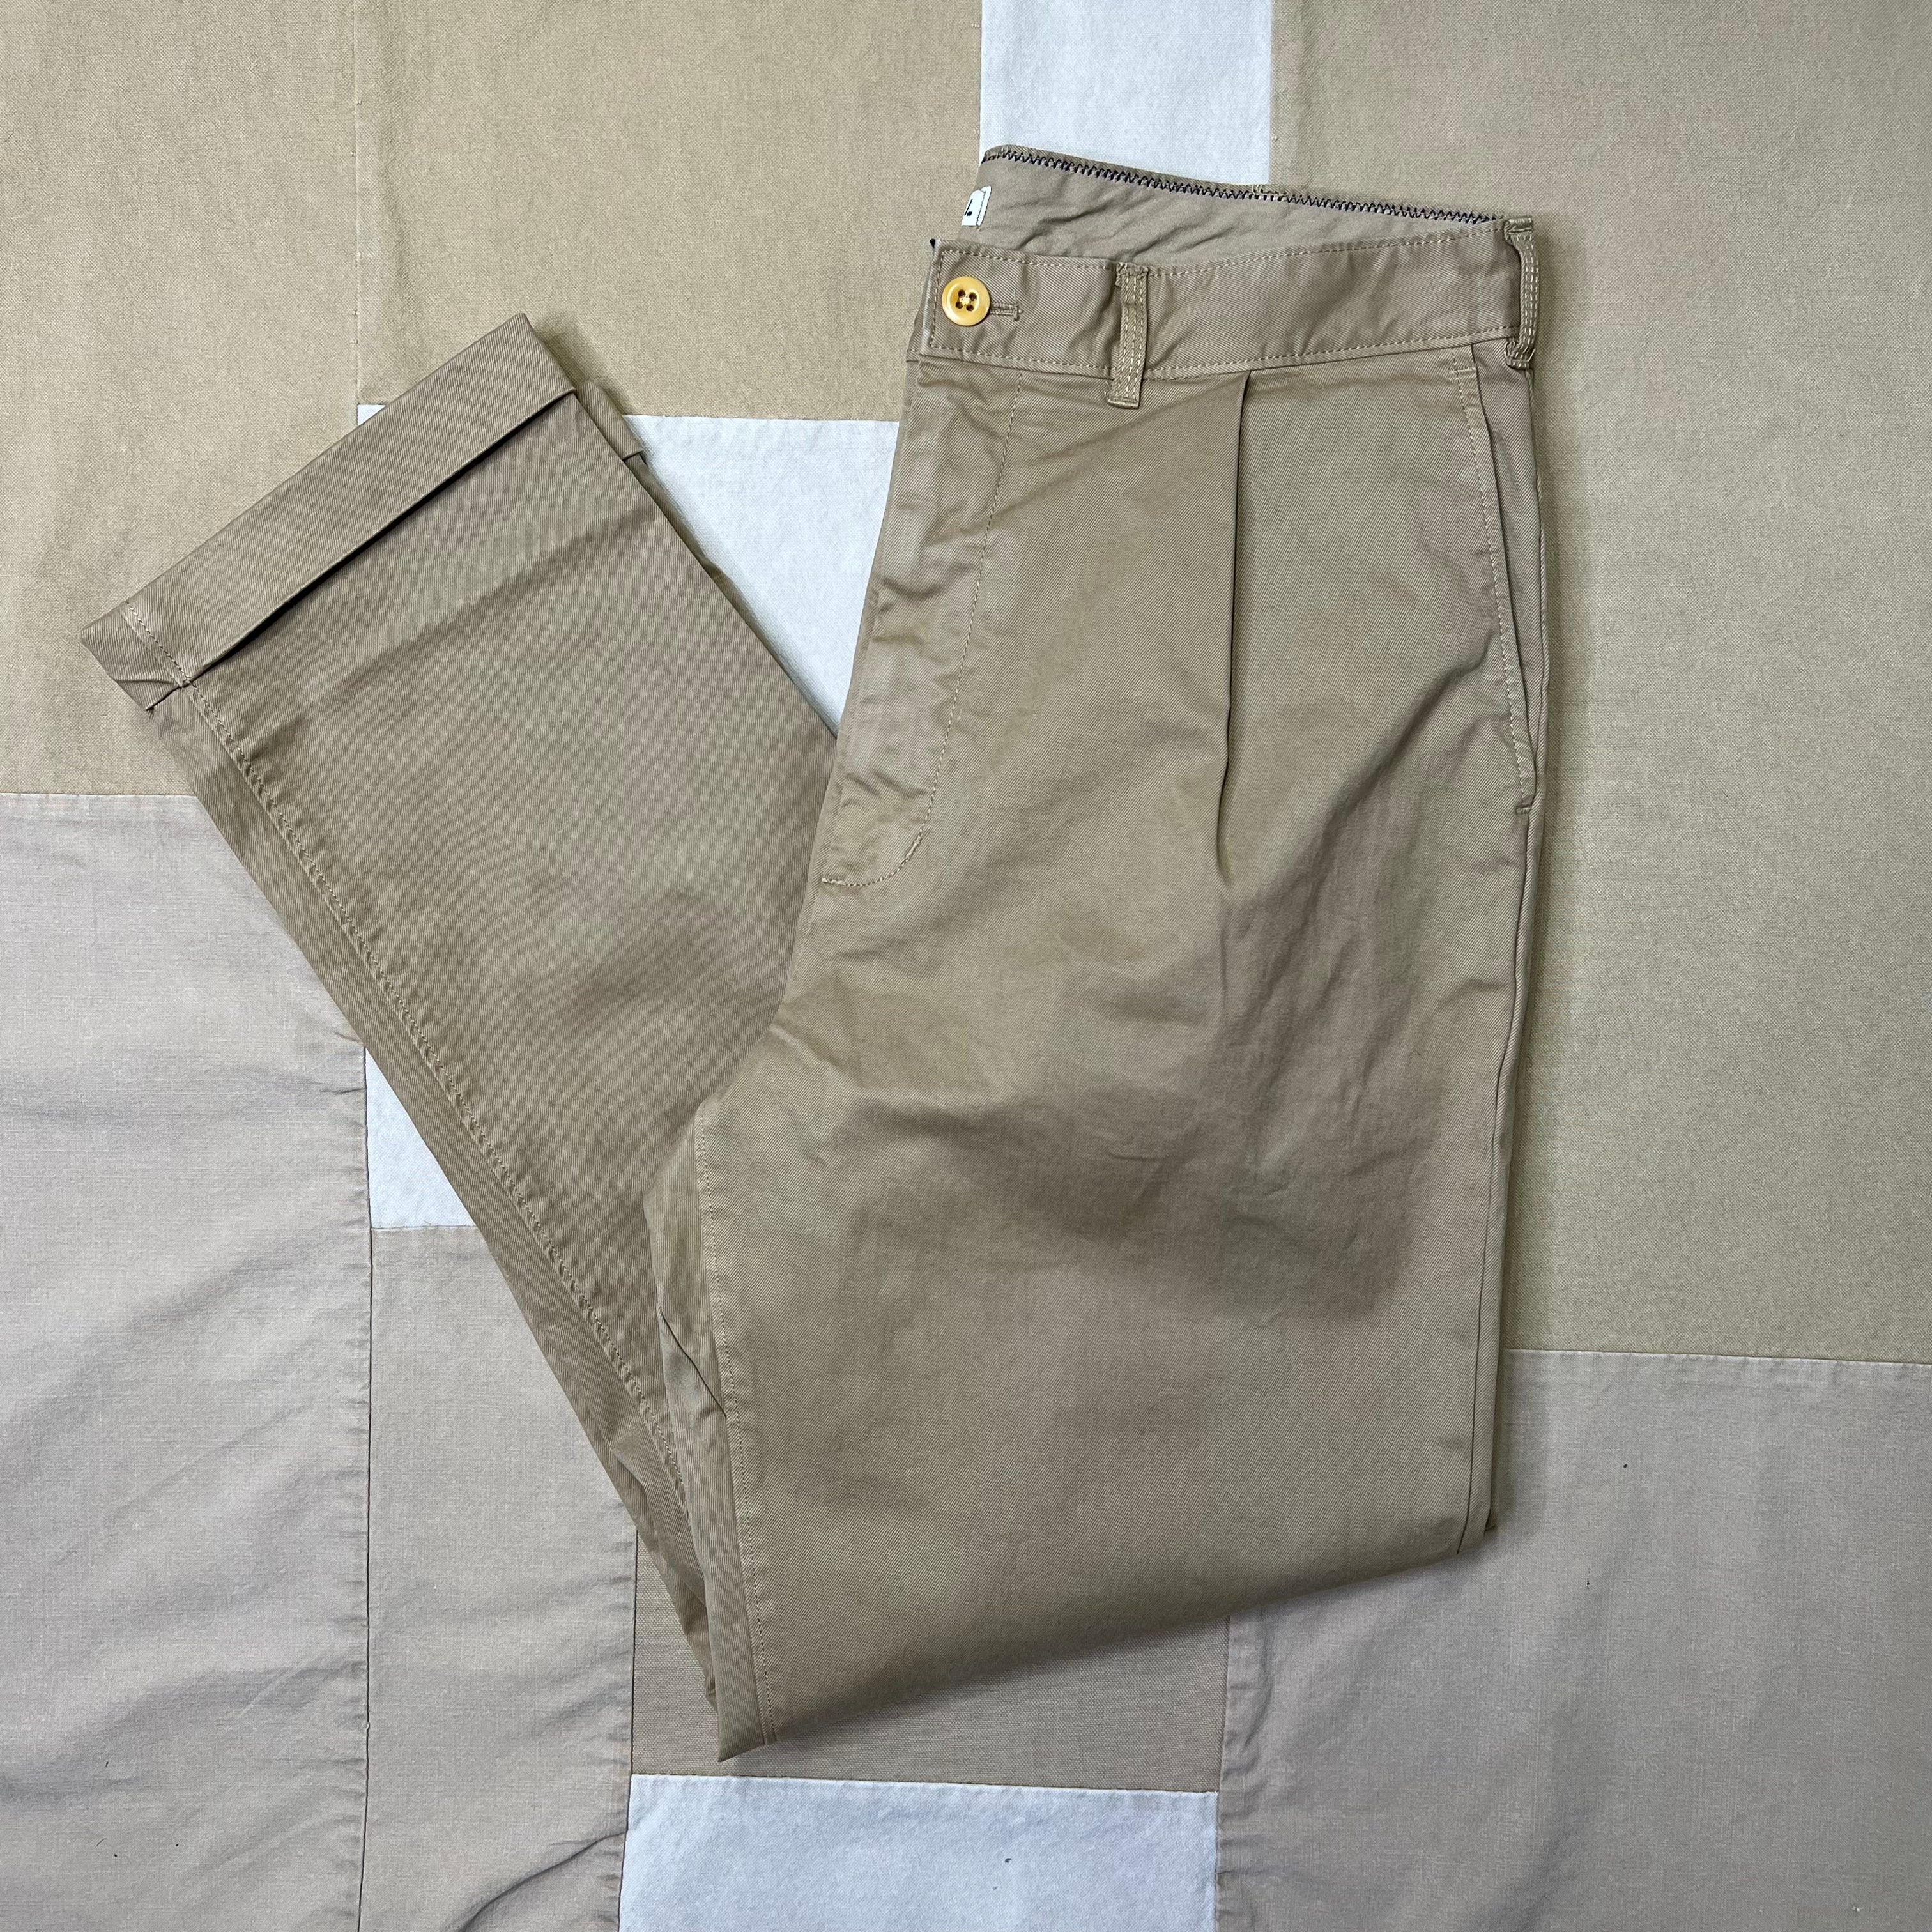 Straight Leg Pant in Vintage Wash Chino Long Inseam, Faded Khaki